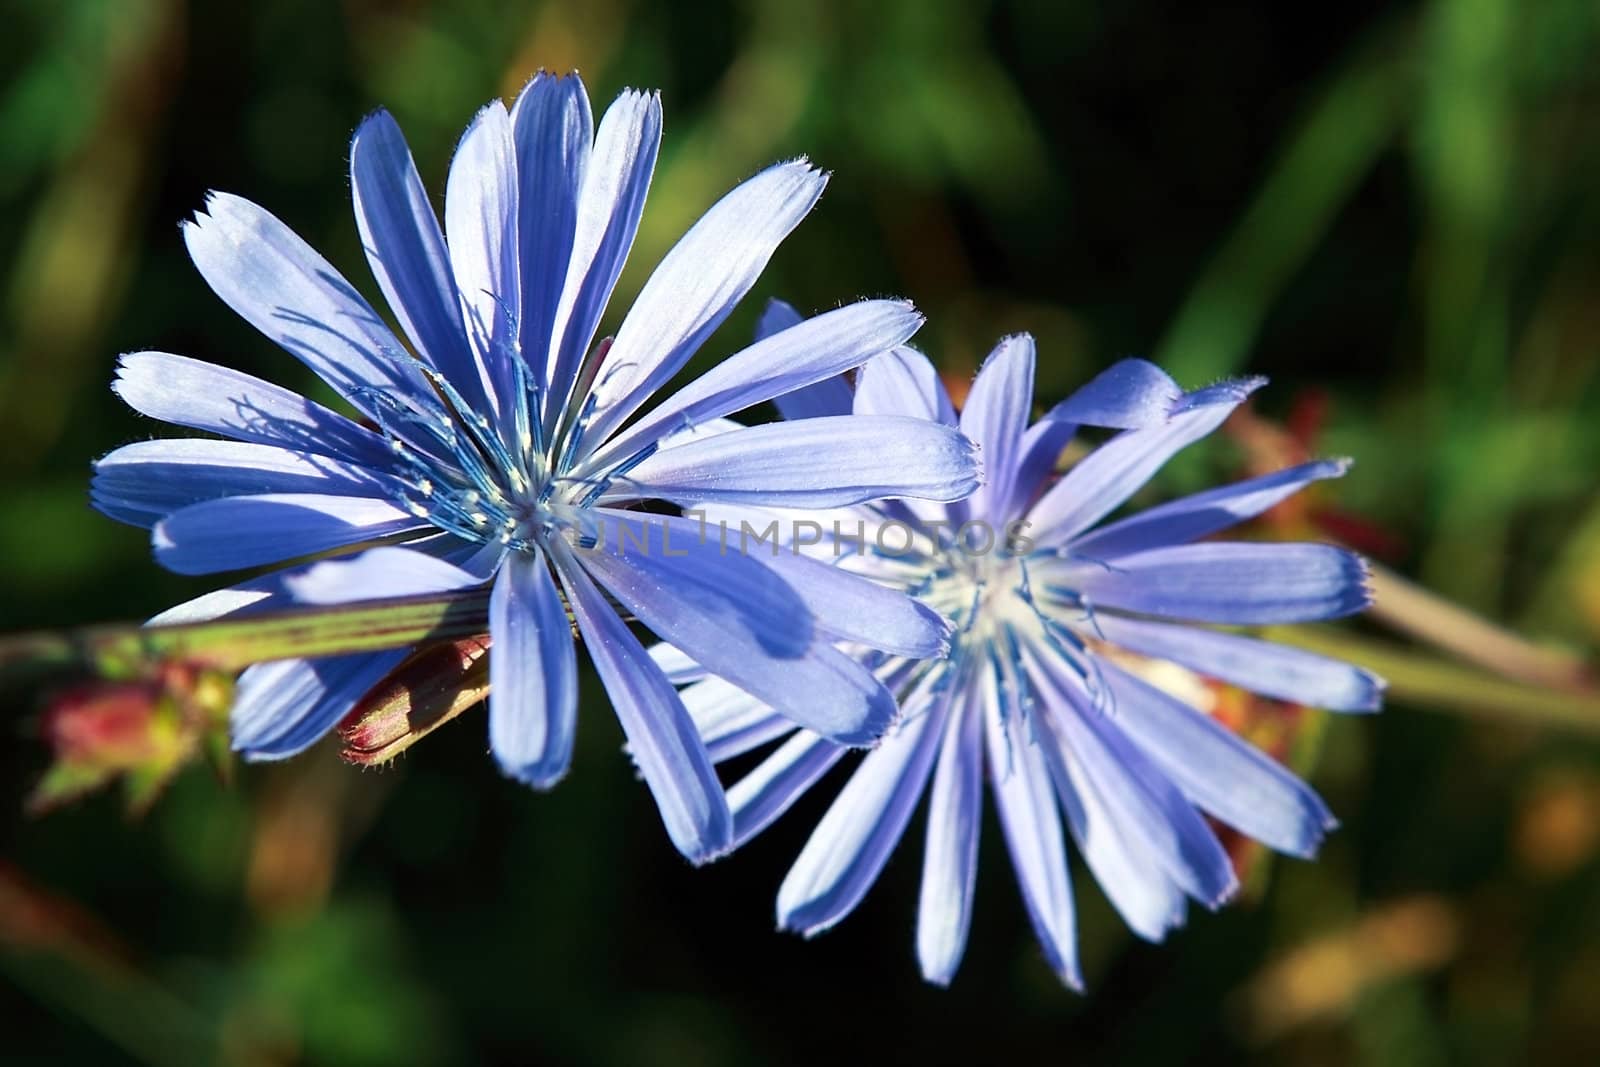 Cichorium intybus - blue chicory flowers close up outdoor